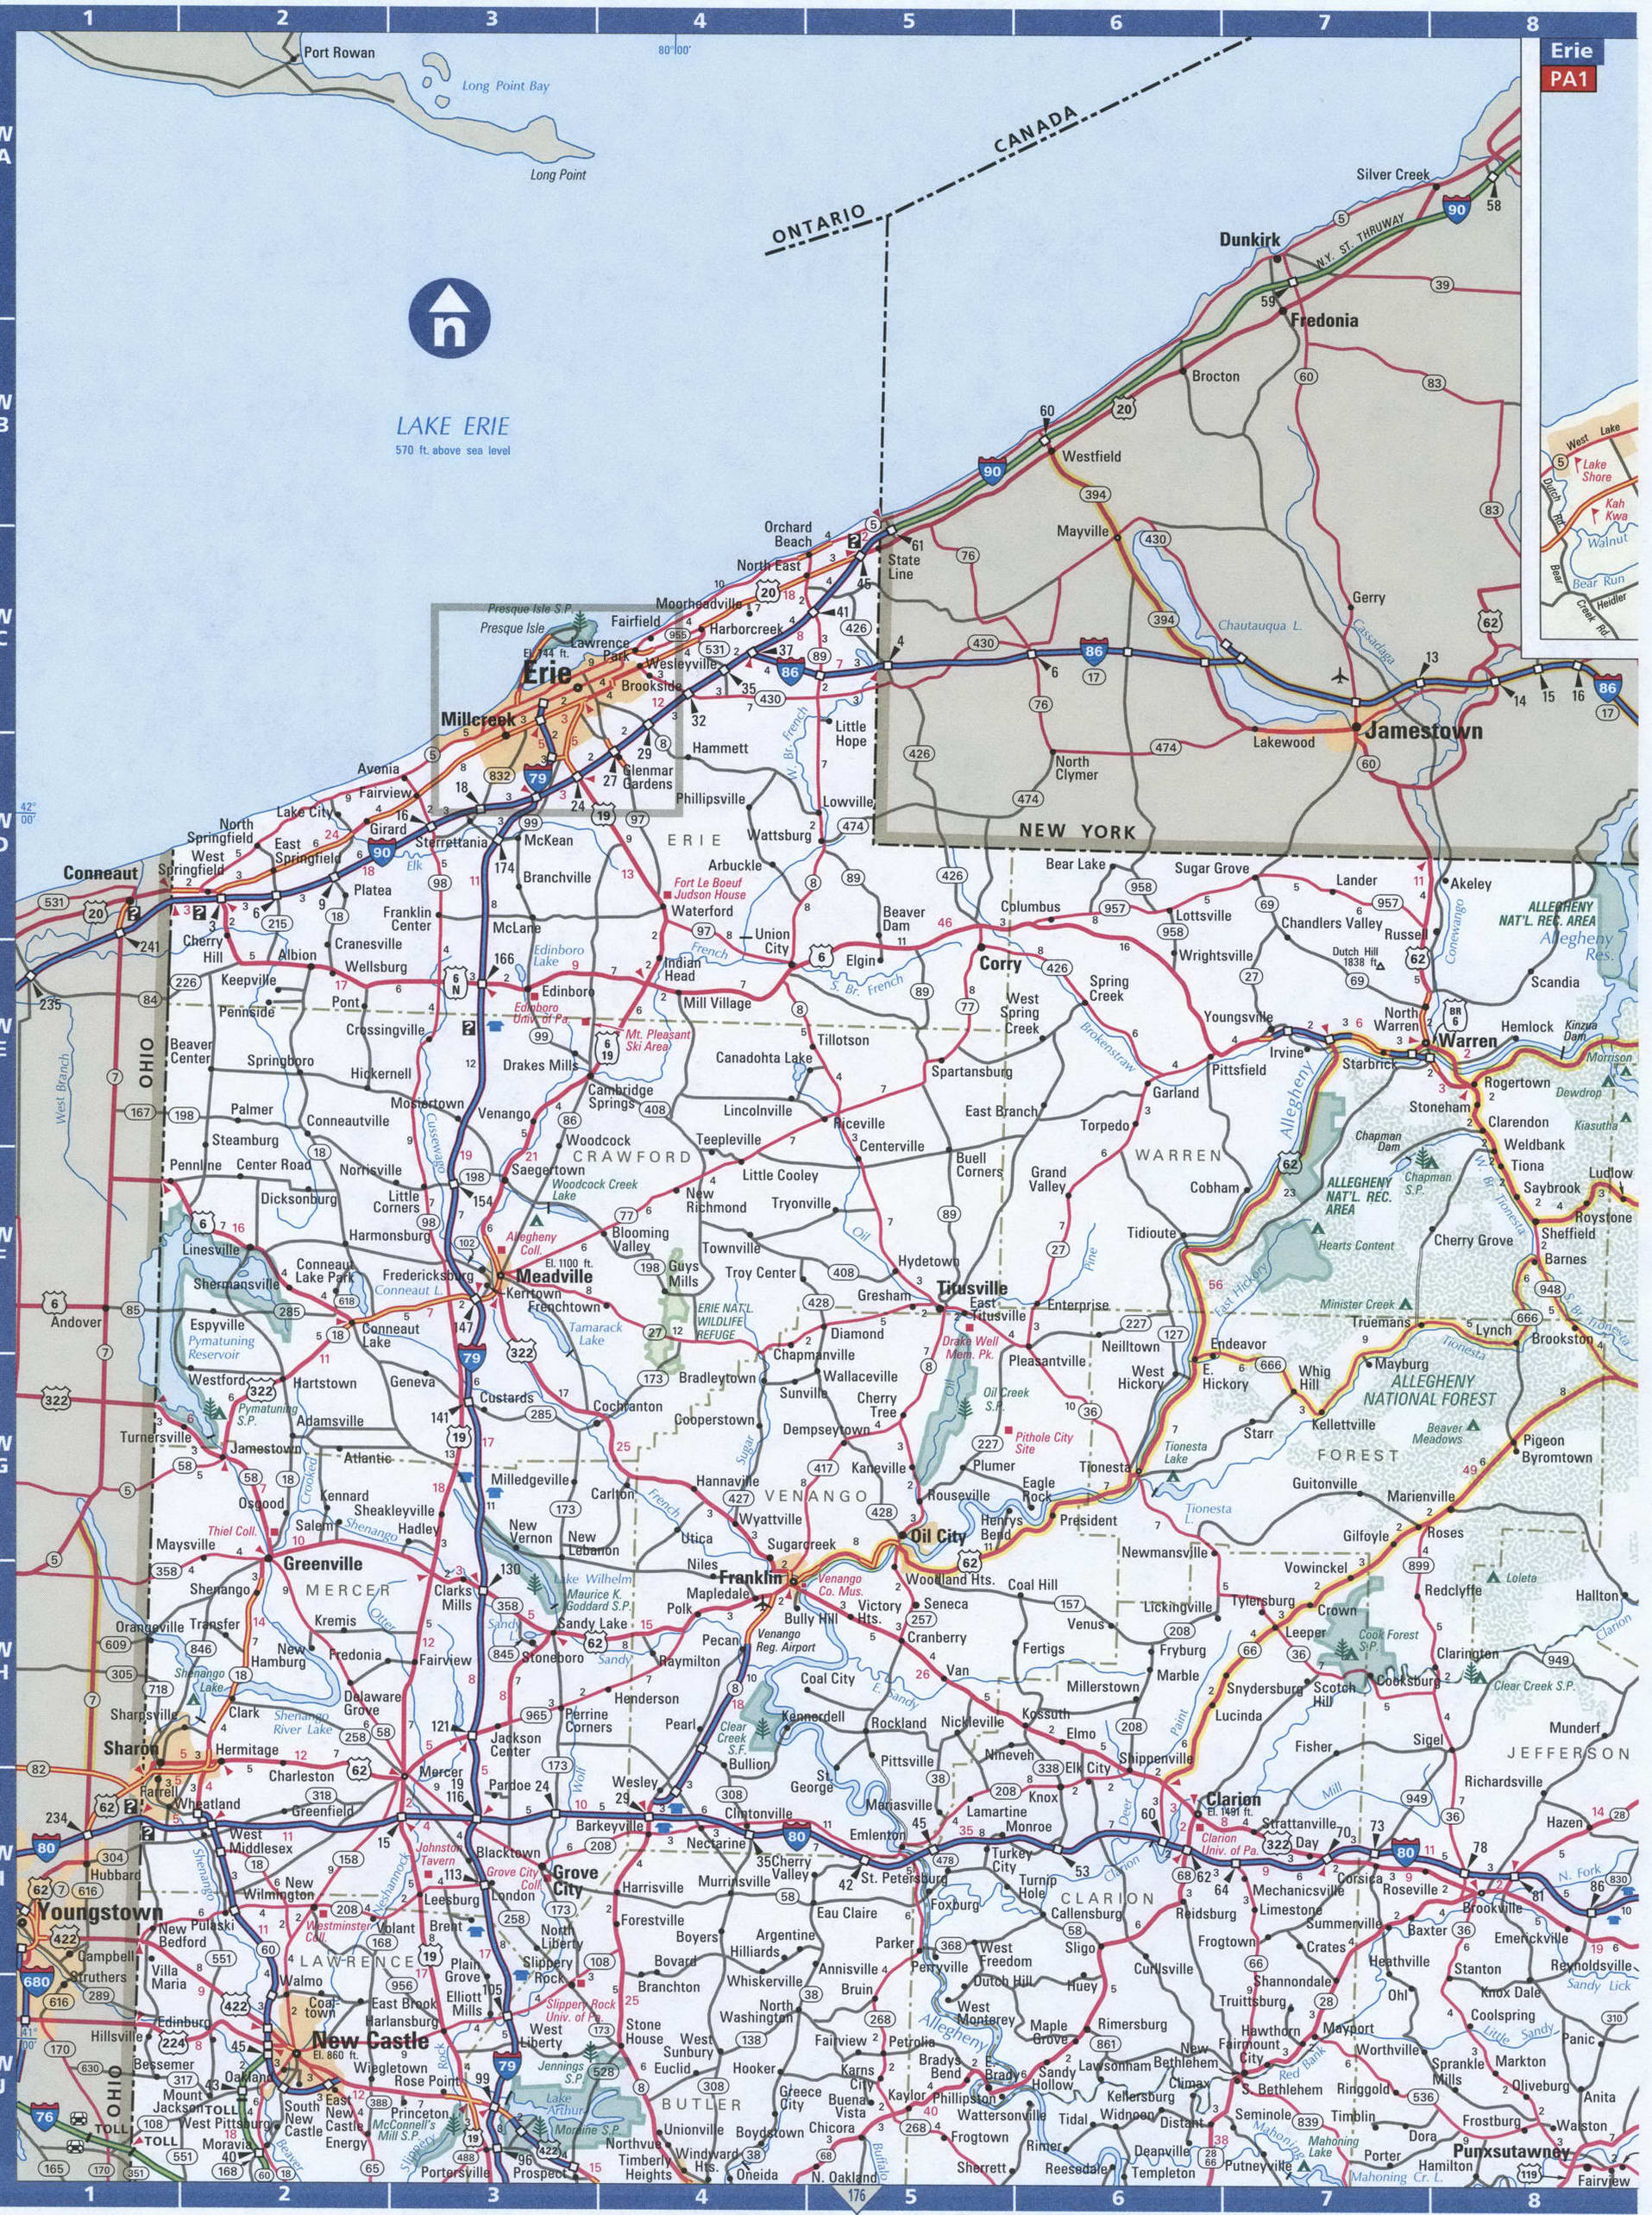 NorthWest Pennsylvania map